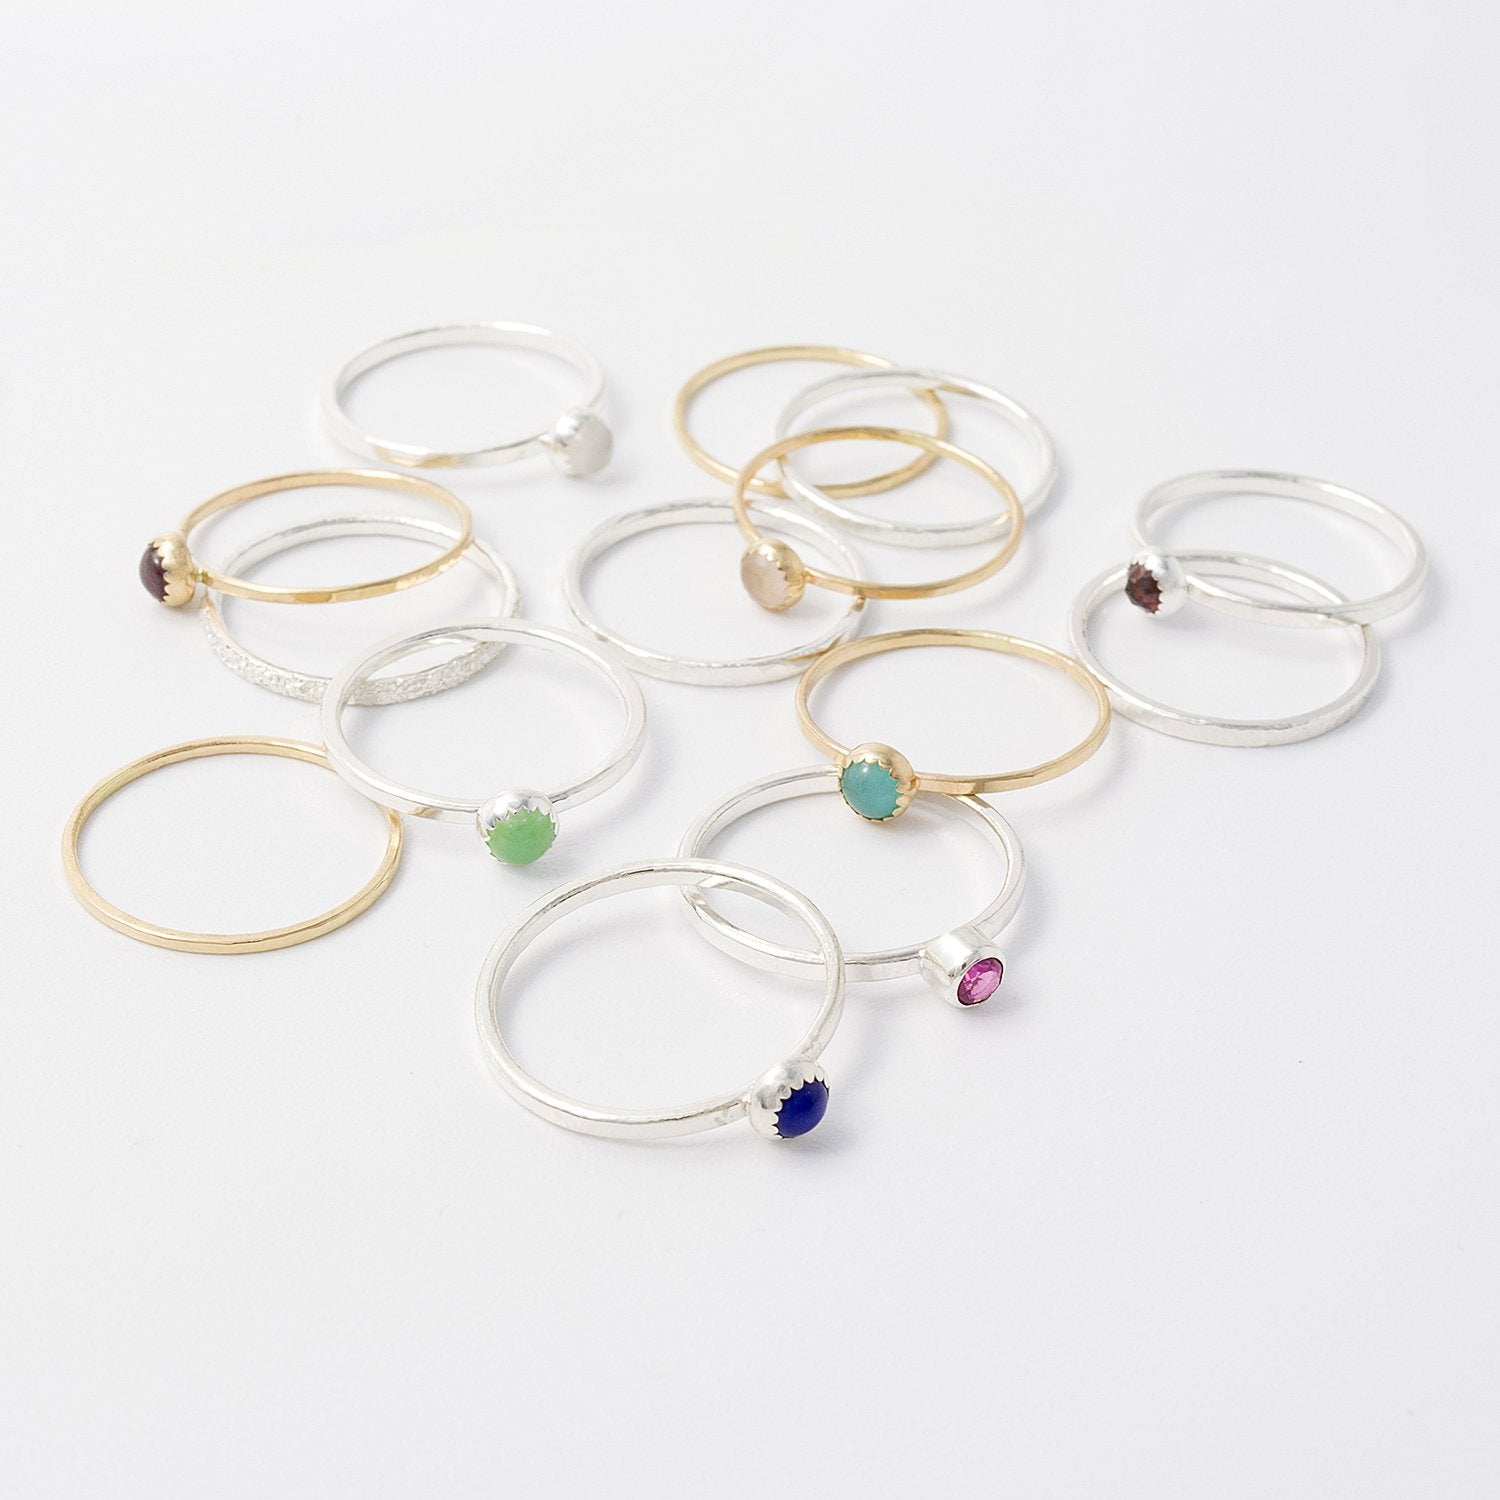 Ruby stacking ring - Simone Walsh Jewellery Australia